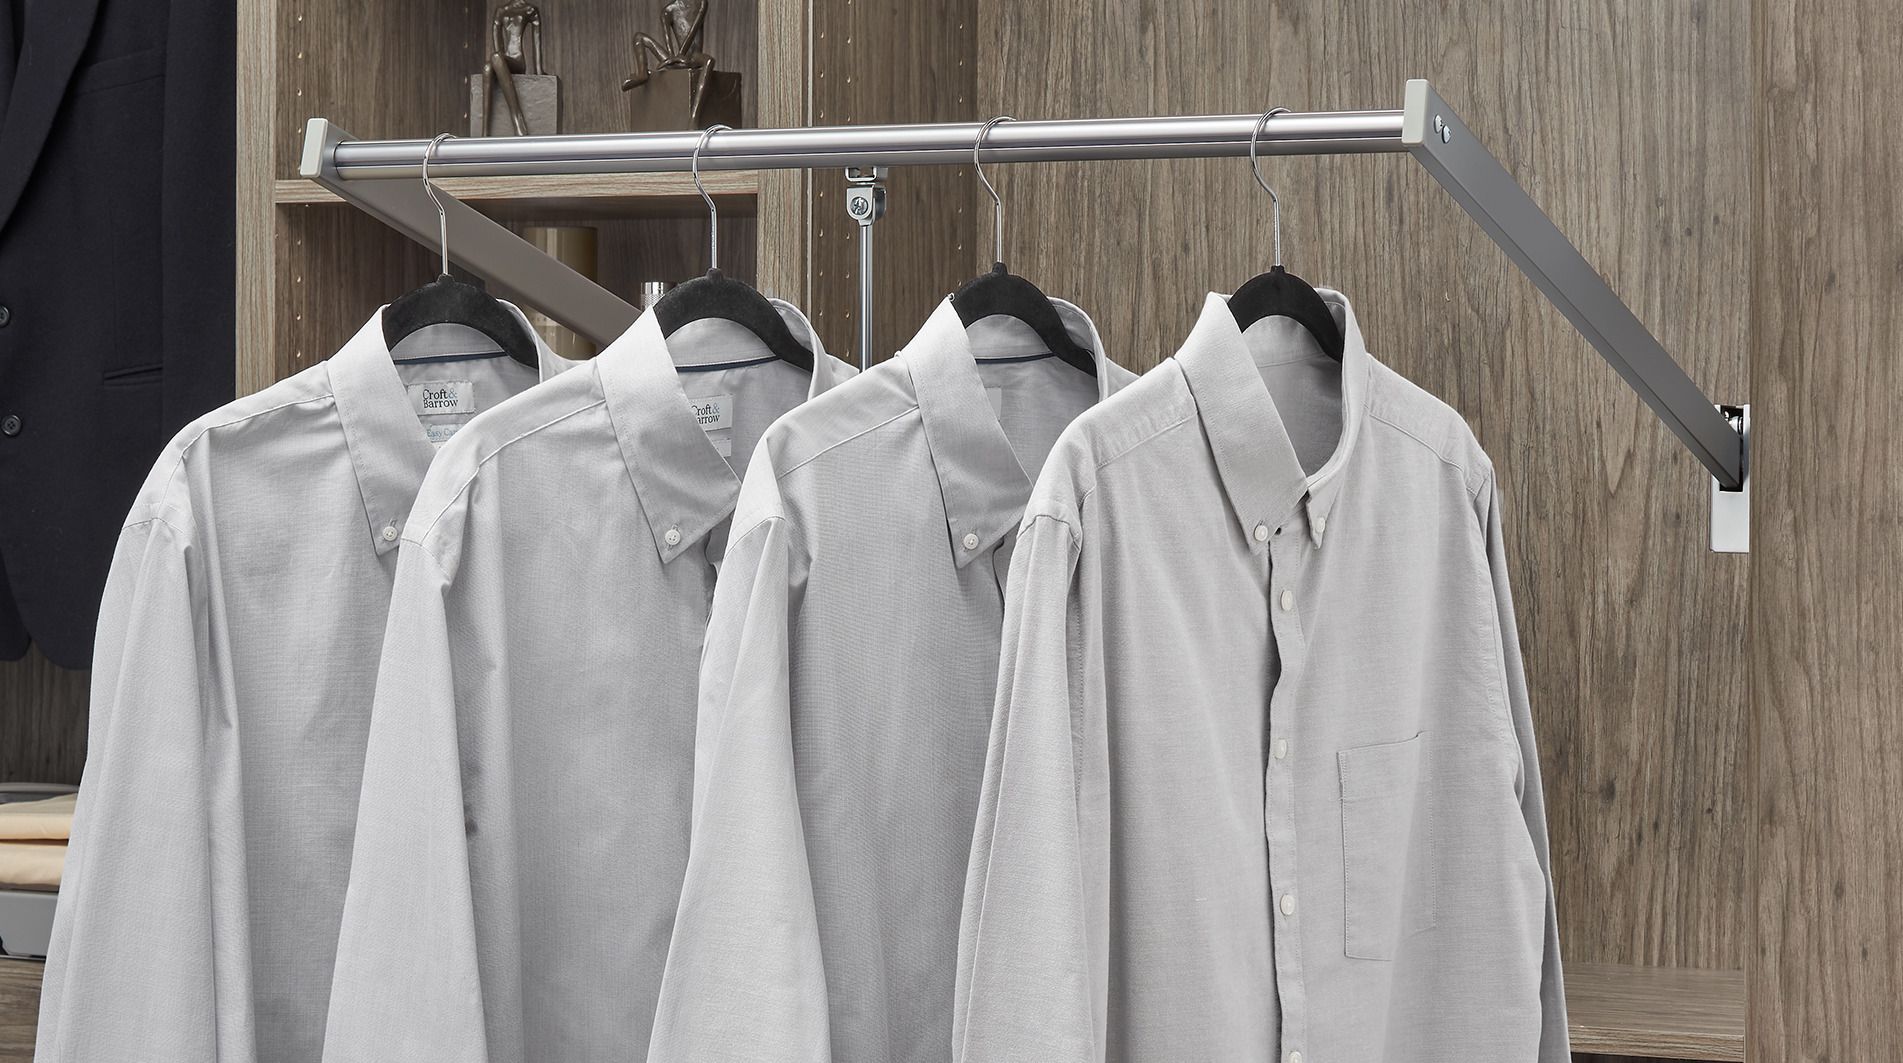 Hanging Clothes Rack  Wood Garment Rack – KROFT